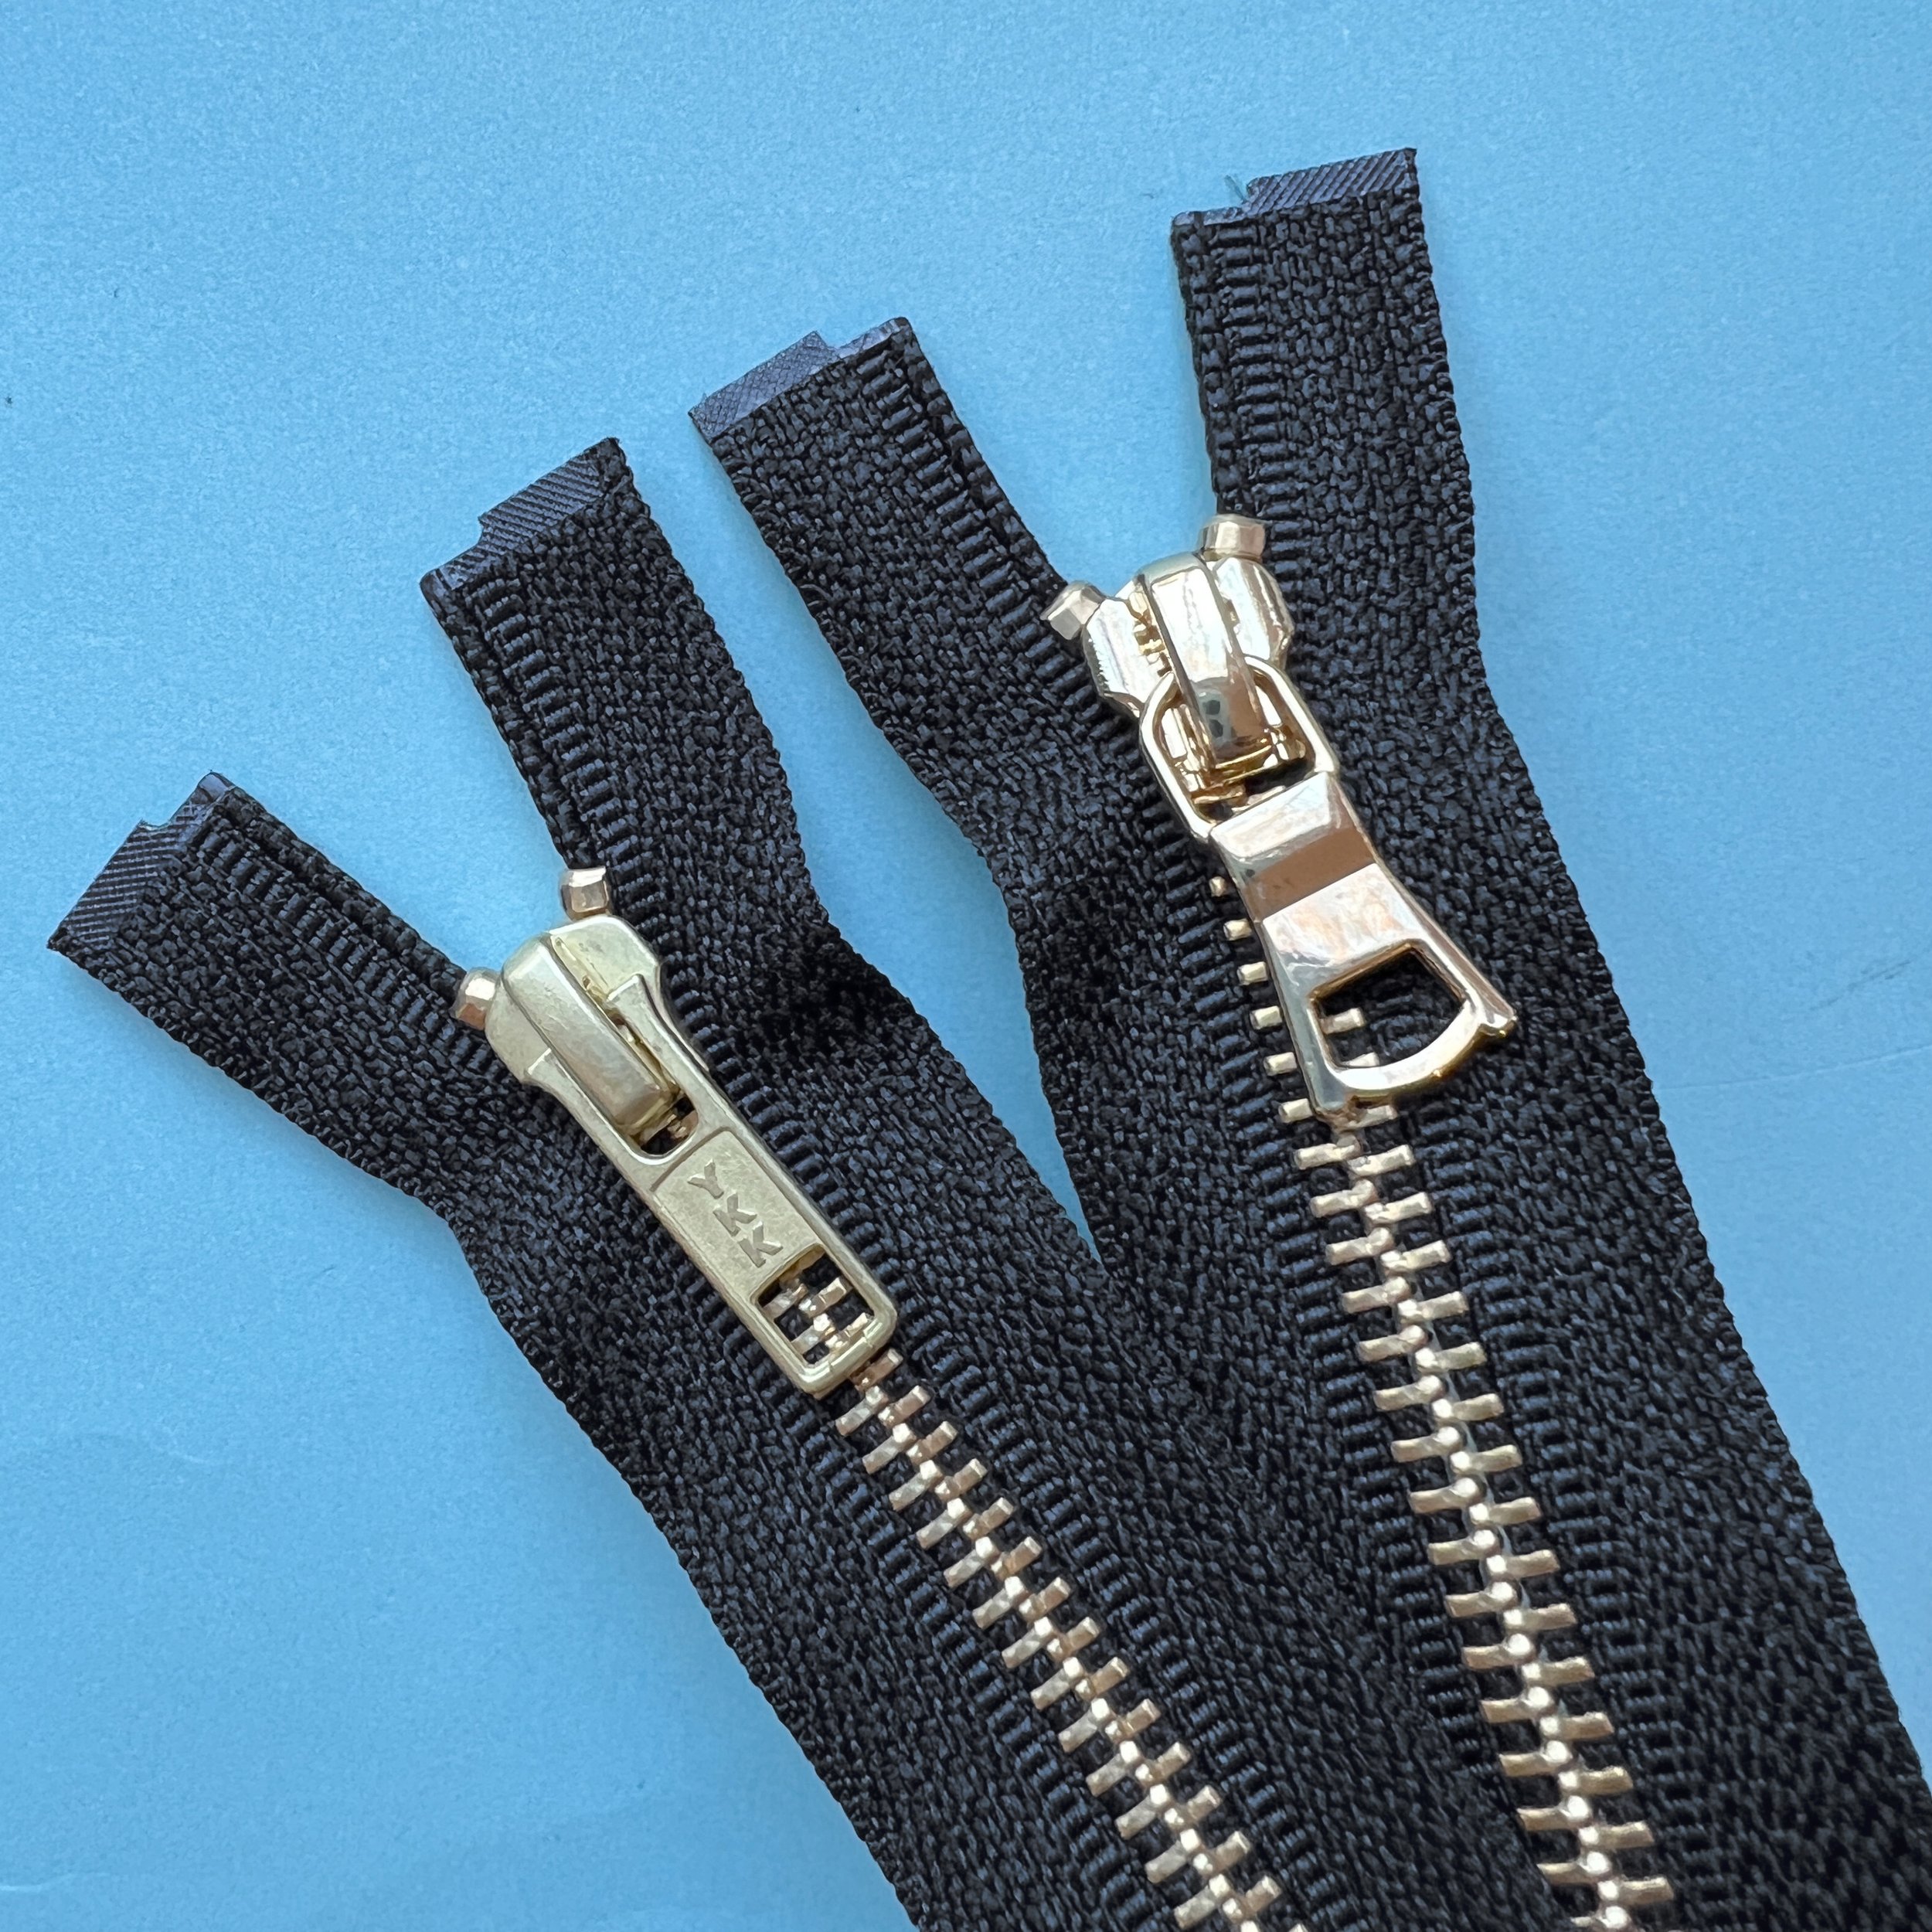 Reader Tip: Fashion a Zipper Stop - Threads